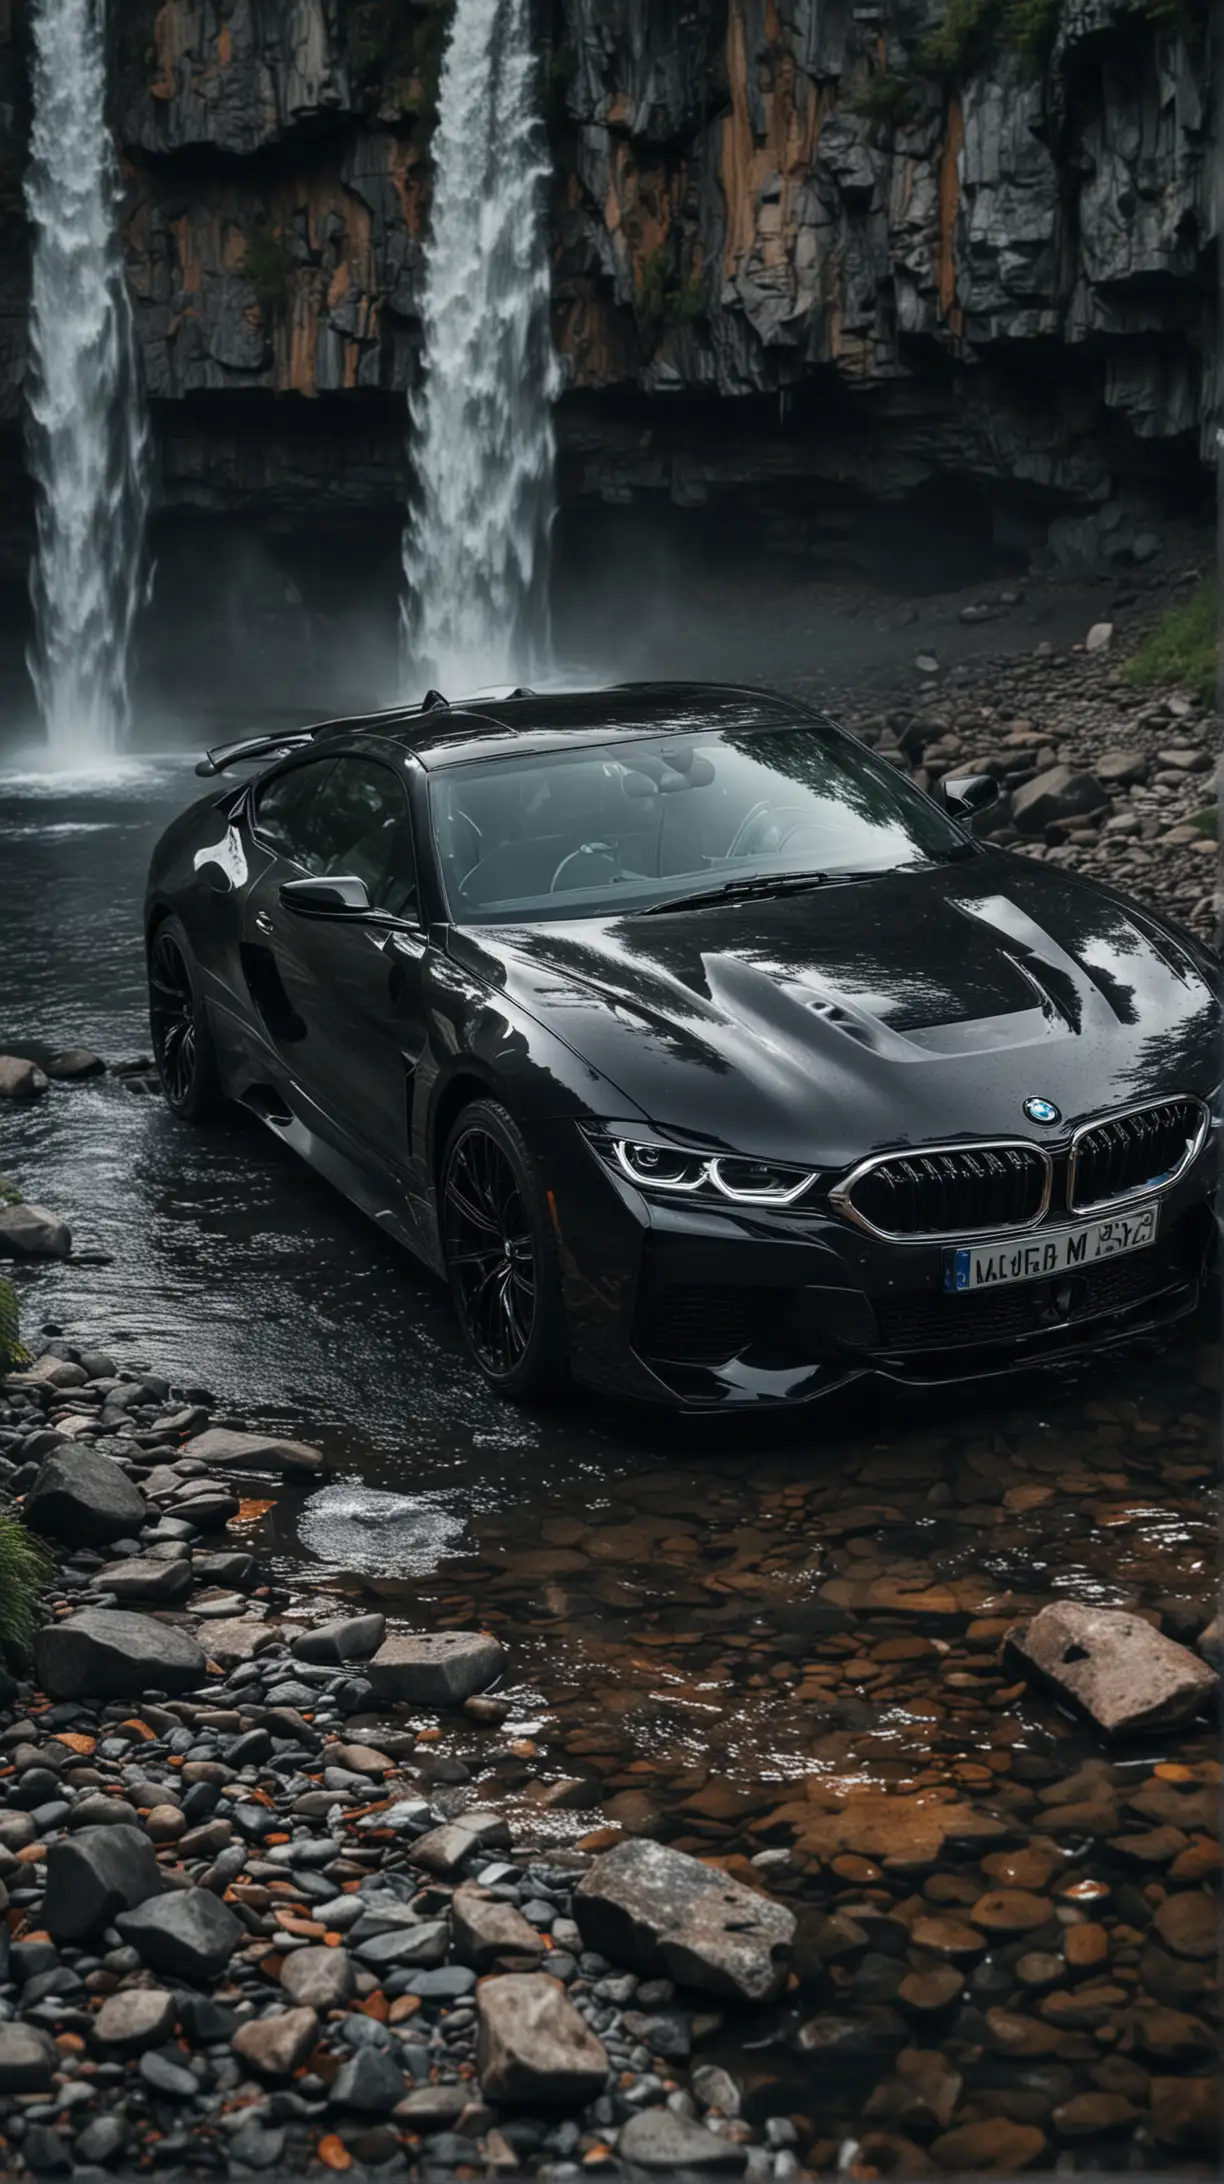 Black BMW Super Sportcar with Illuminated Headlights by a Majestic Waterfall